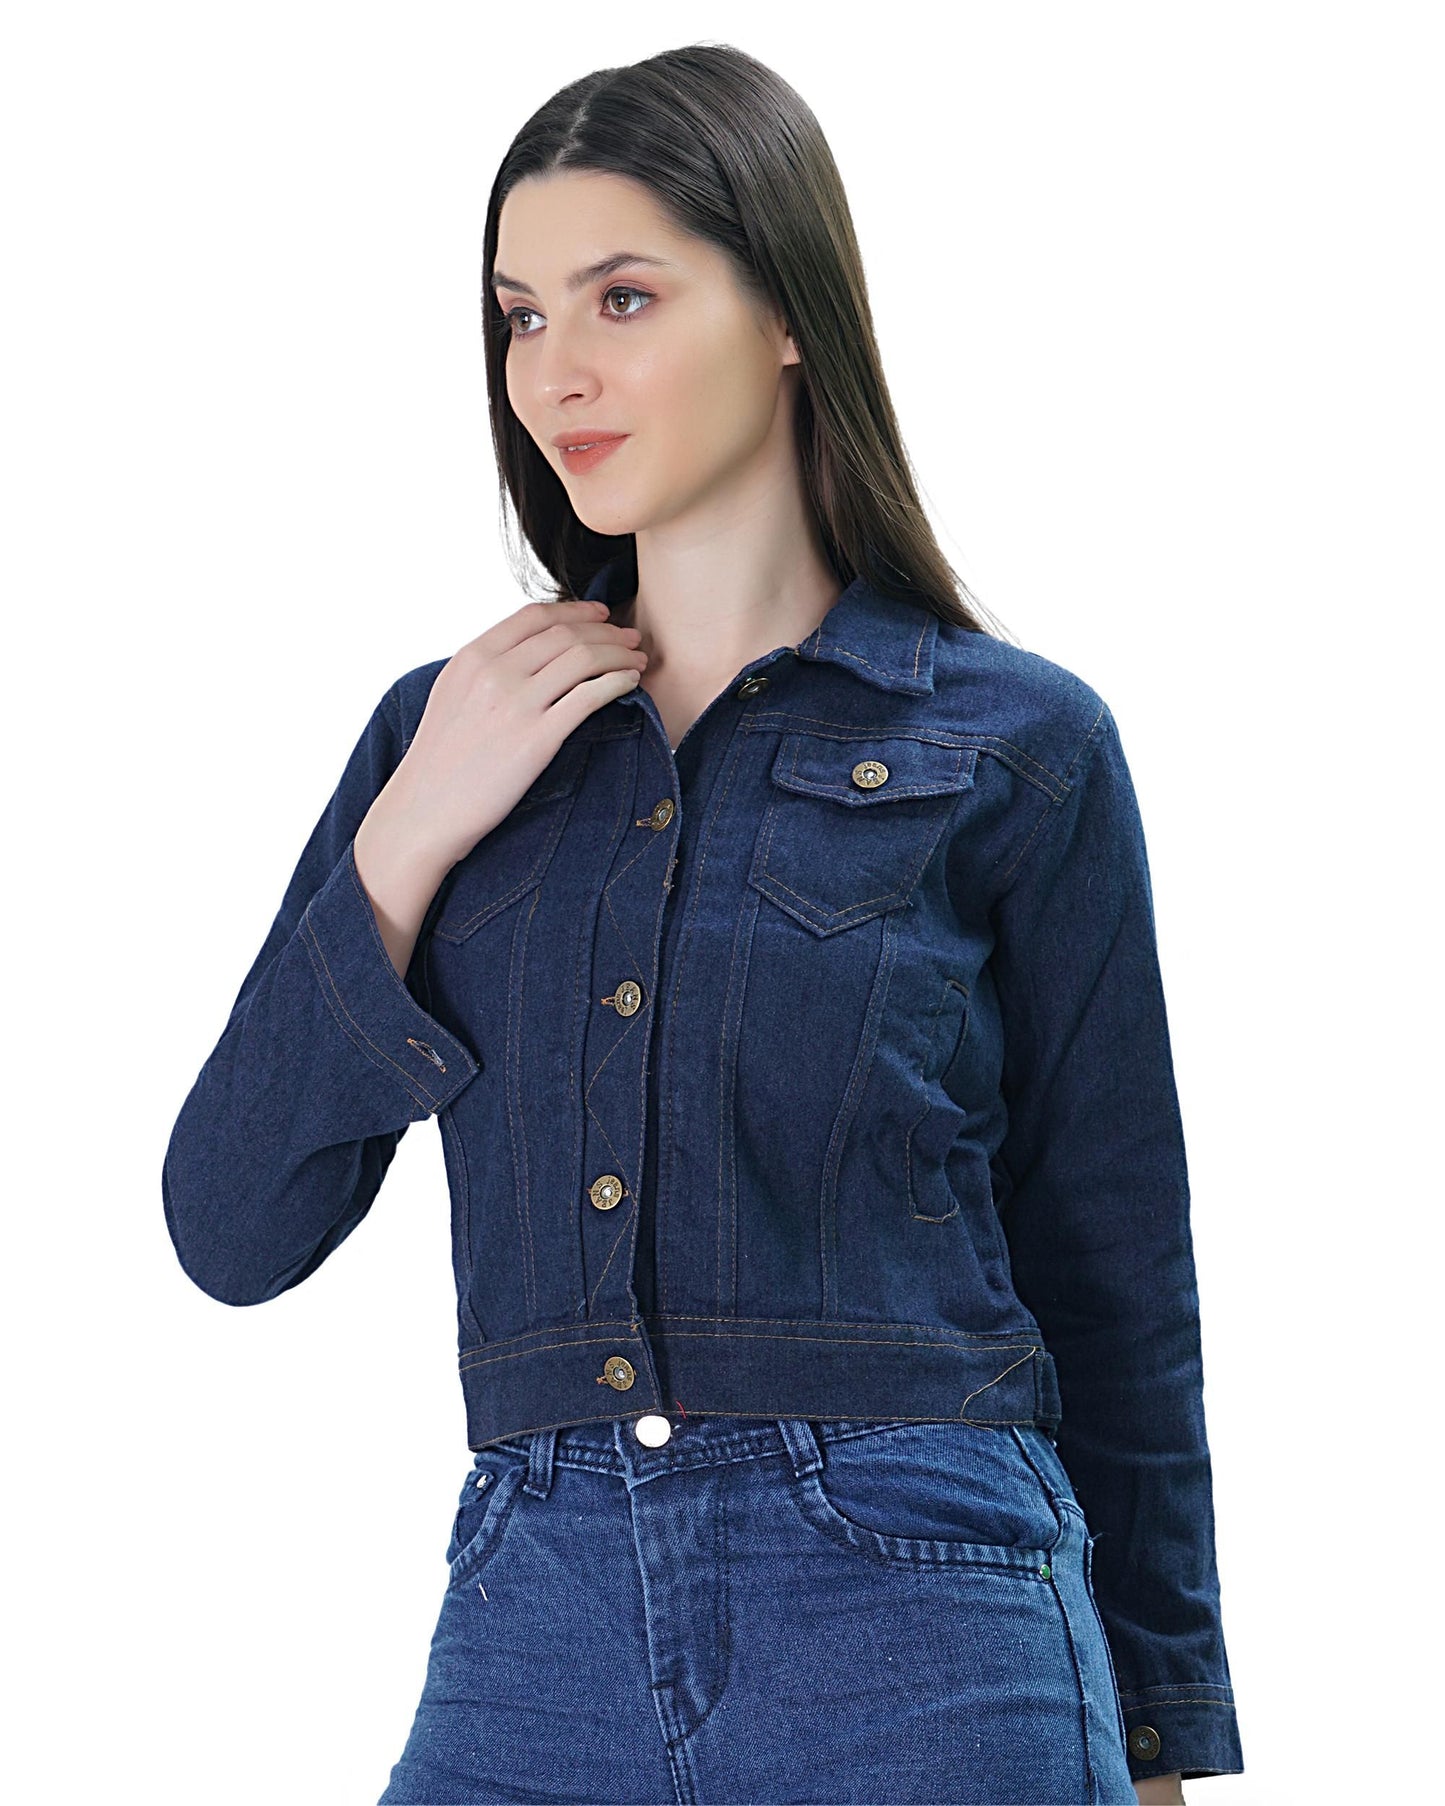 Lily Buds Denim Jacket For Women (Navy Blue)